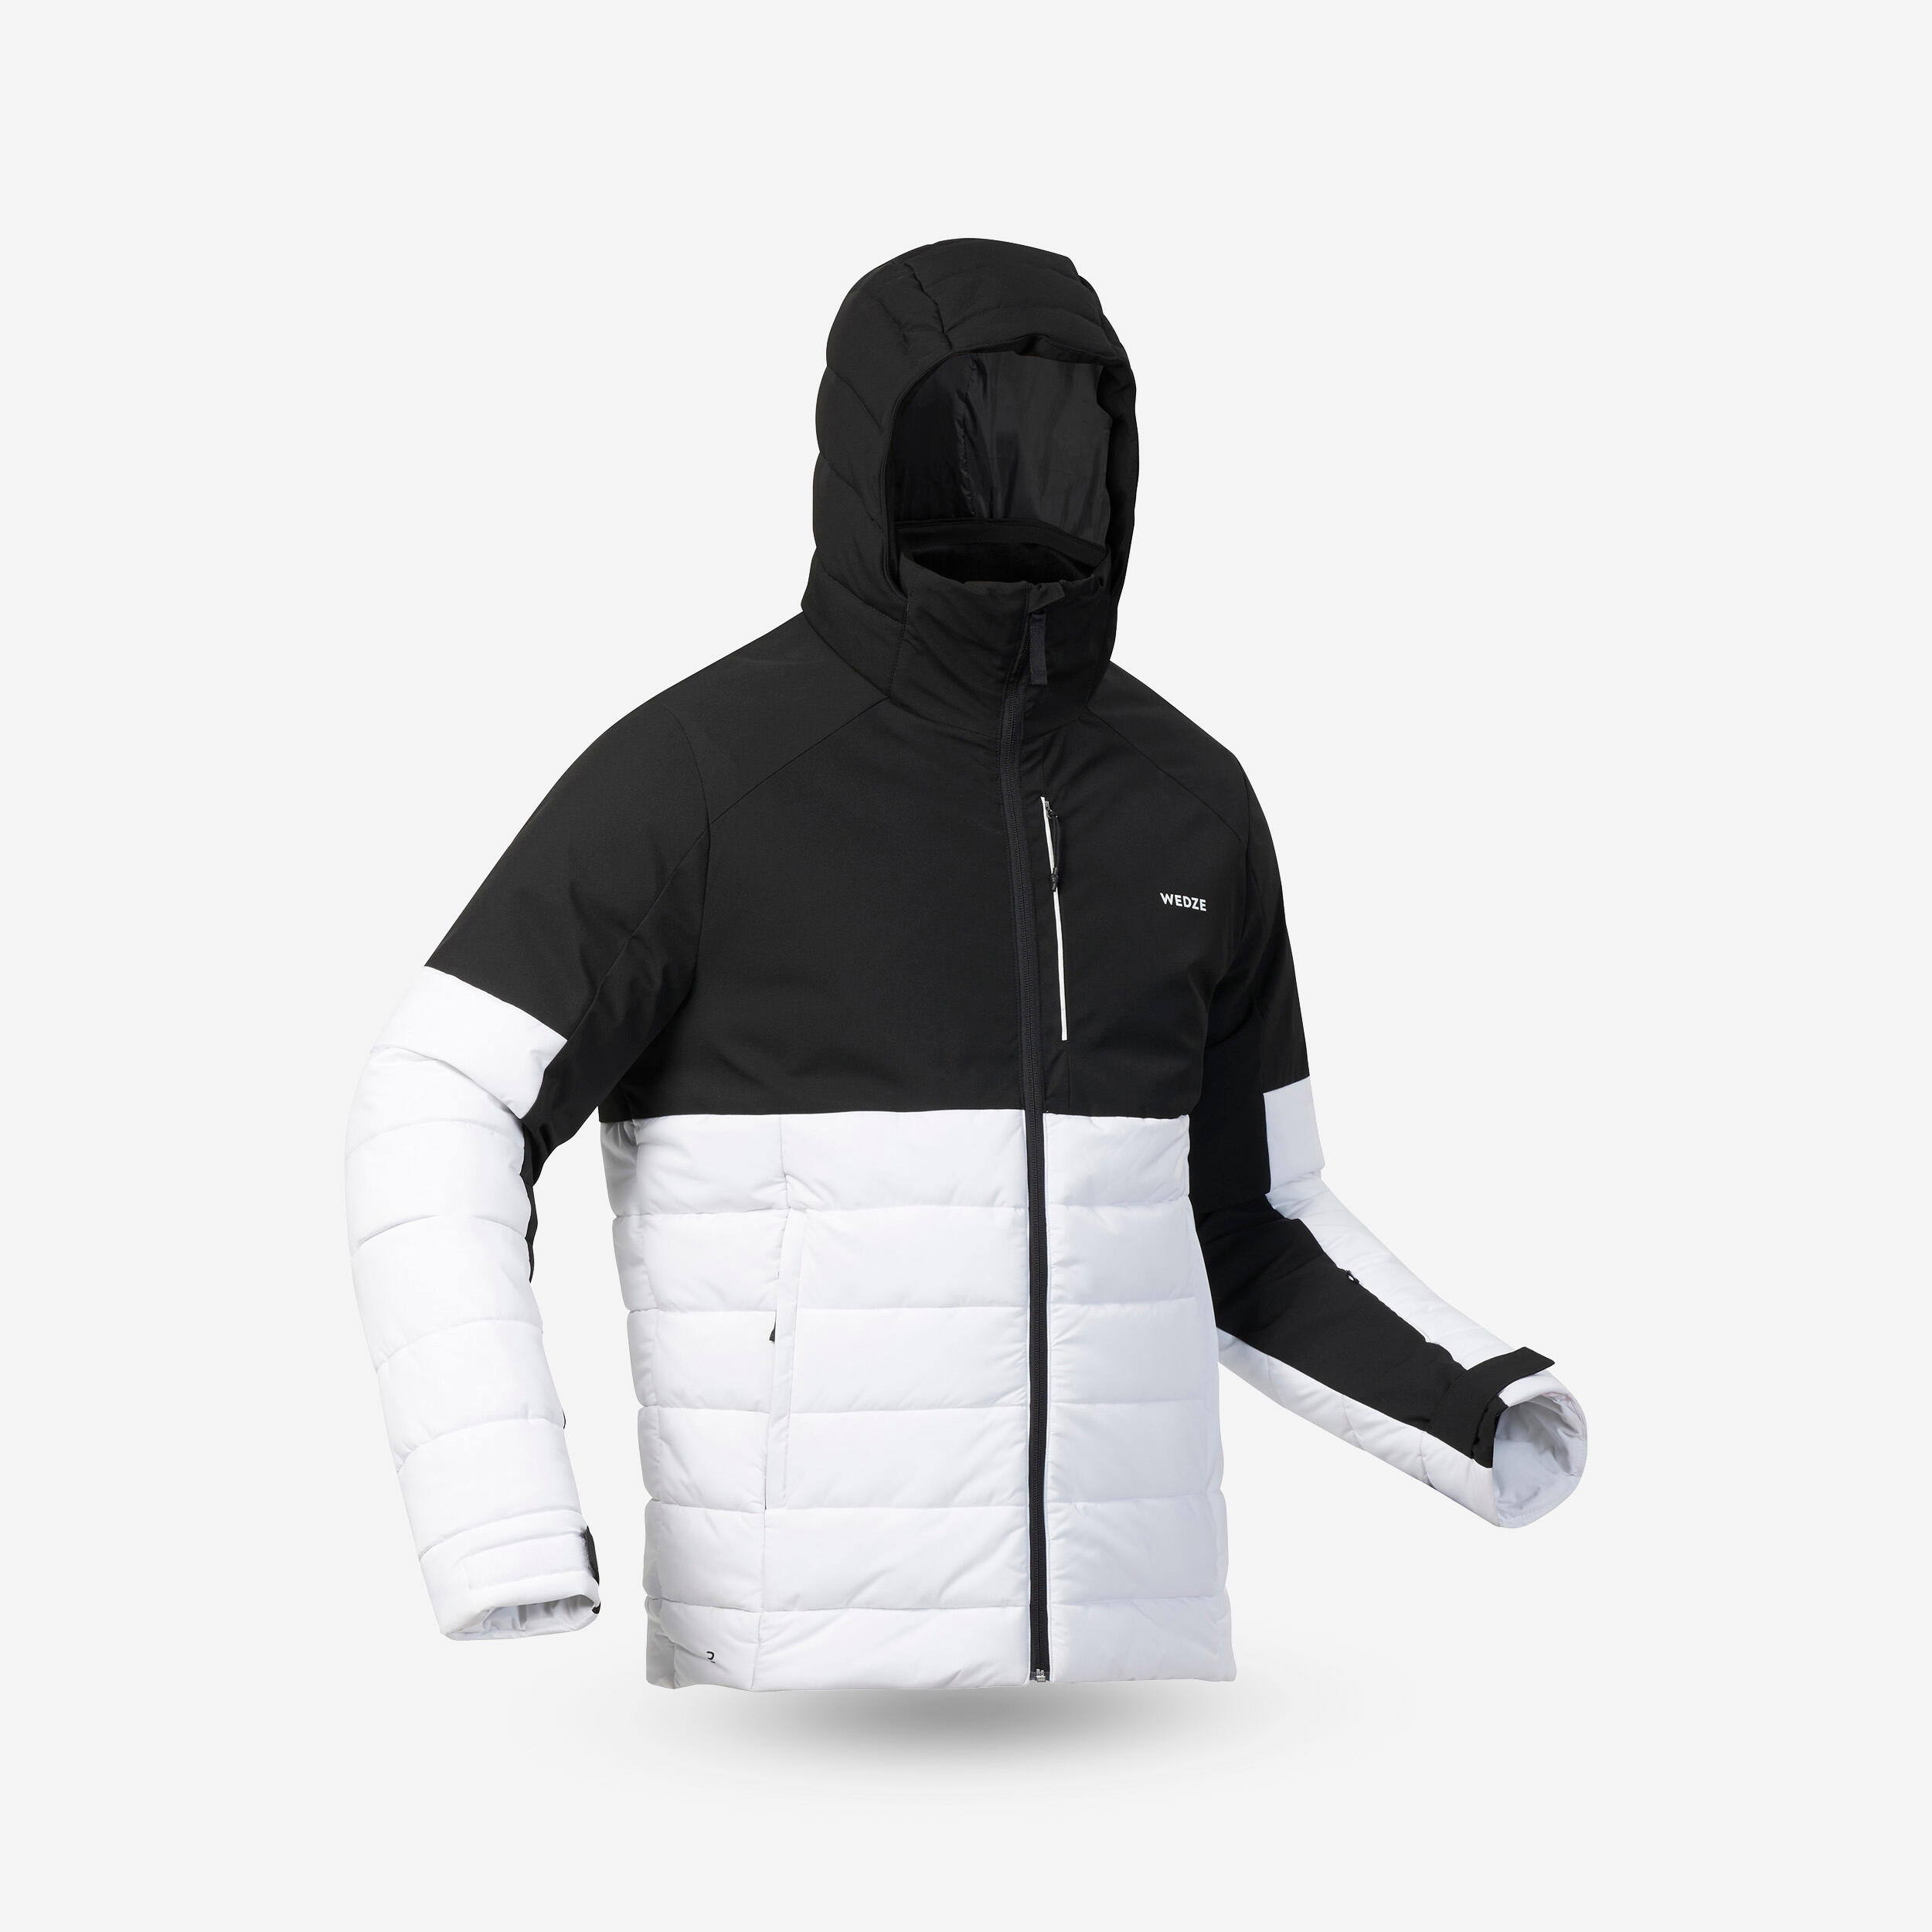 Men’s warm ski and snowboard jacket 100 - white/black 1/12